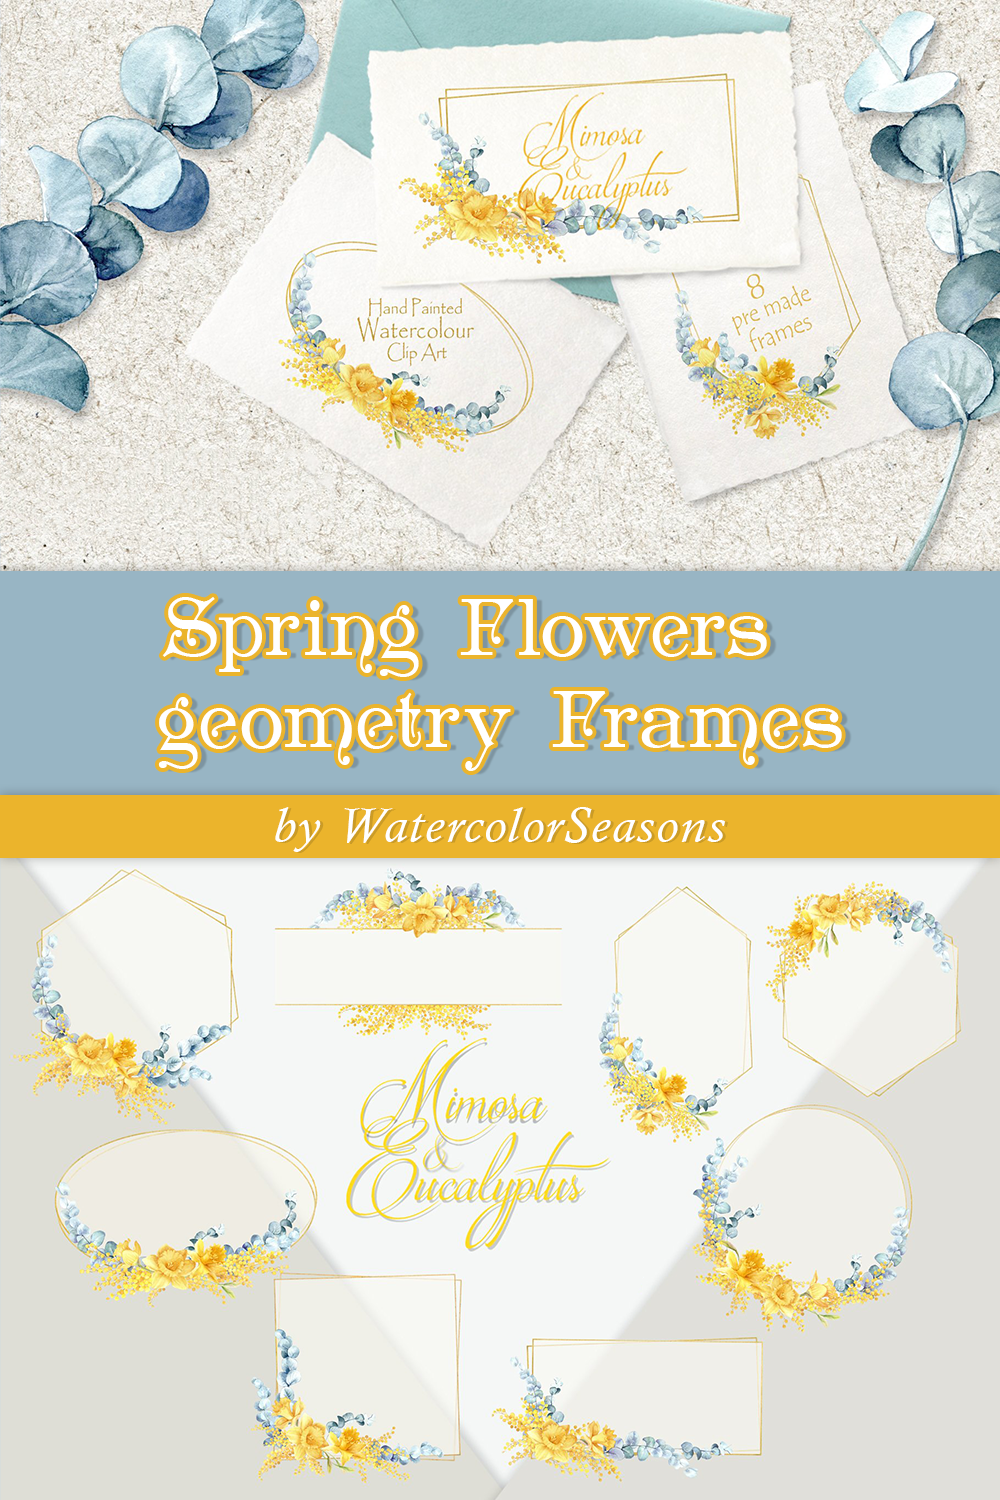 Spring flowers geometry frames of pinterest.